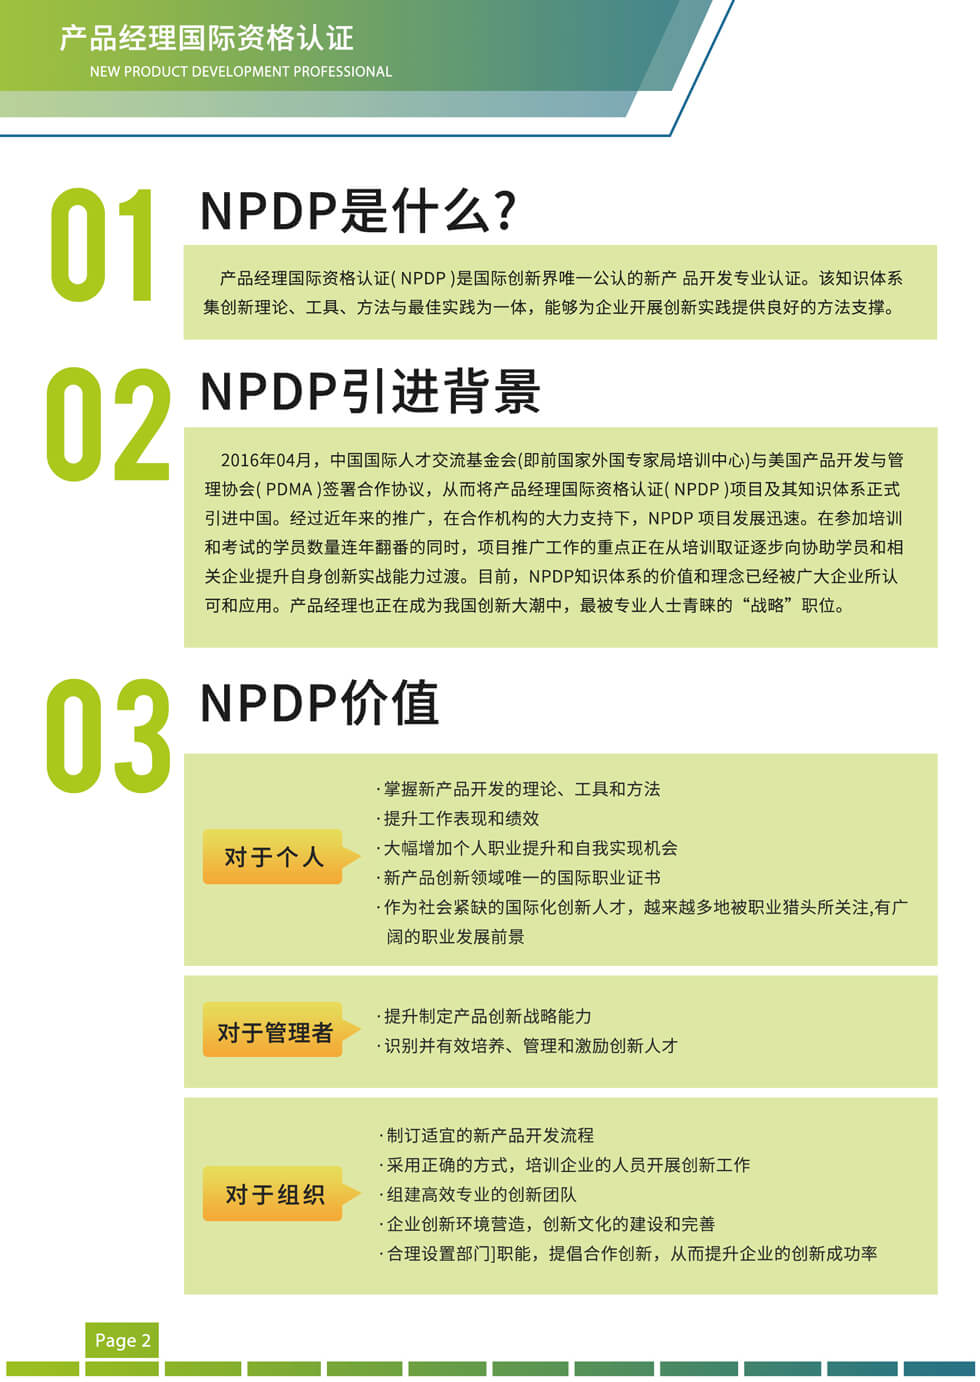 NPDP产品管理认证课程